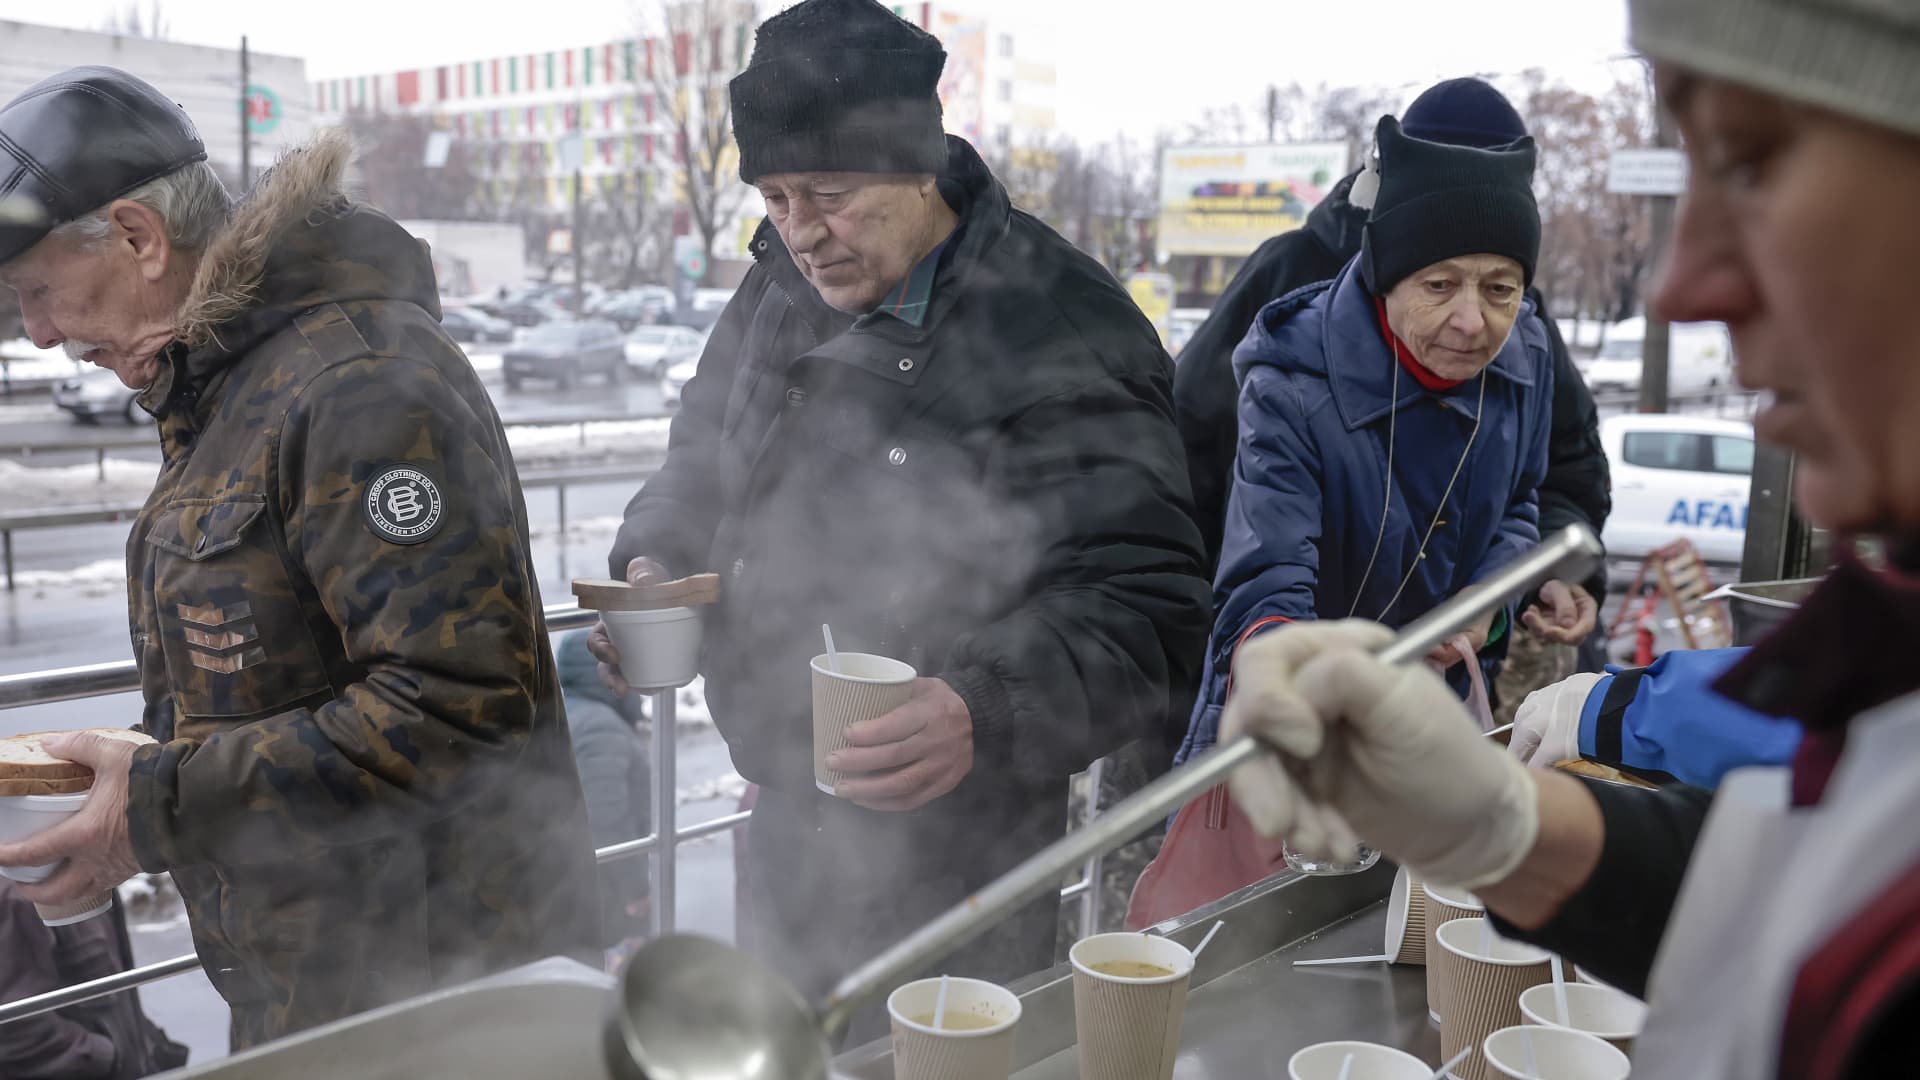 Russia targets food, water to starve Ukrainians, international report says